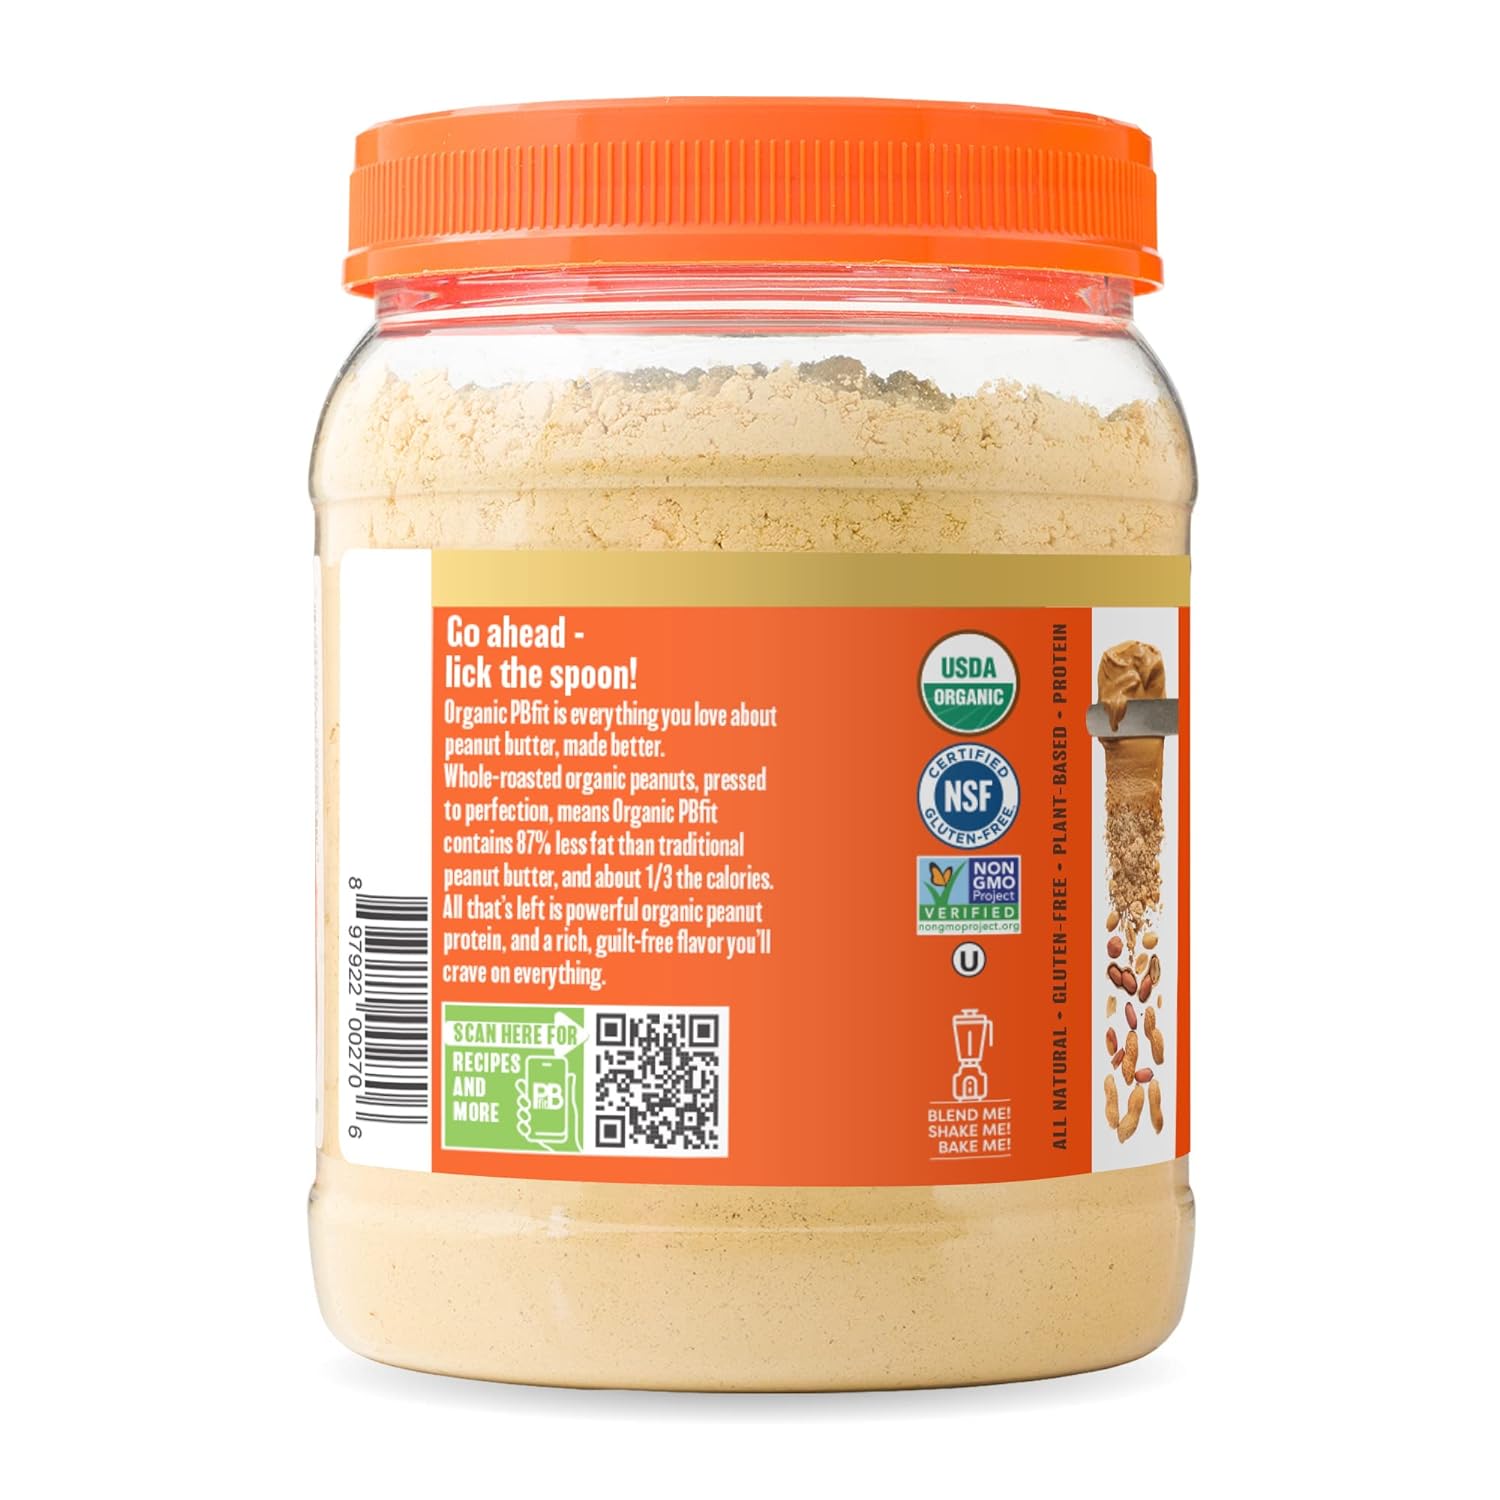 PBfit Organic Peanut Butter Powder Review